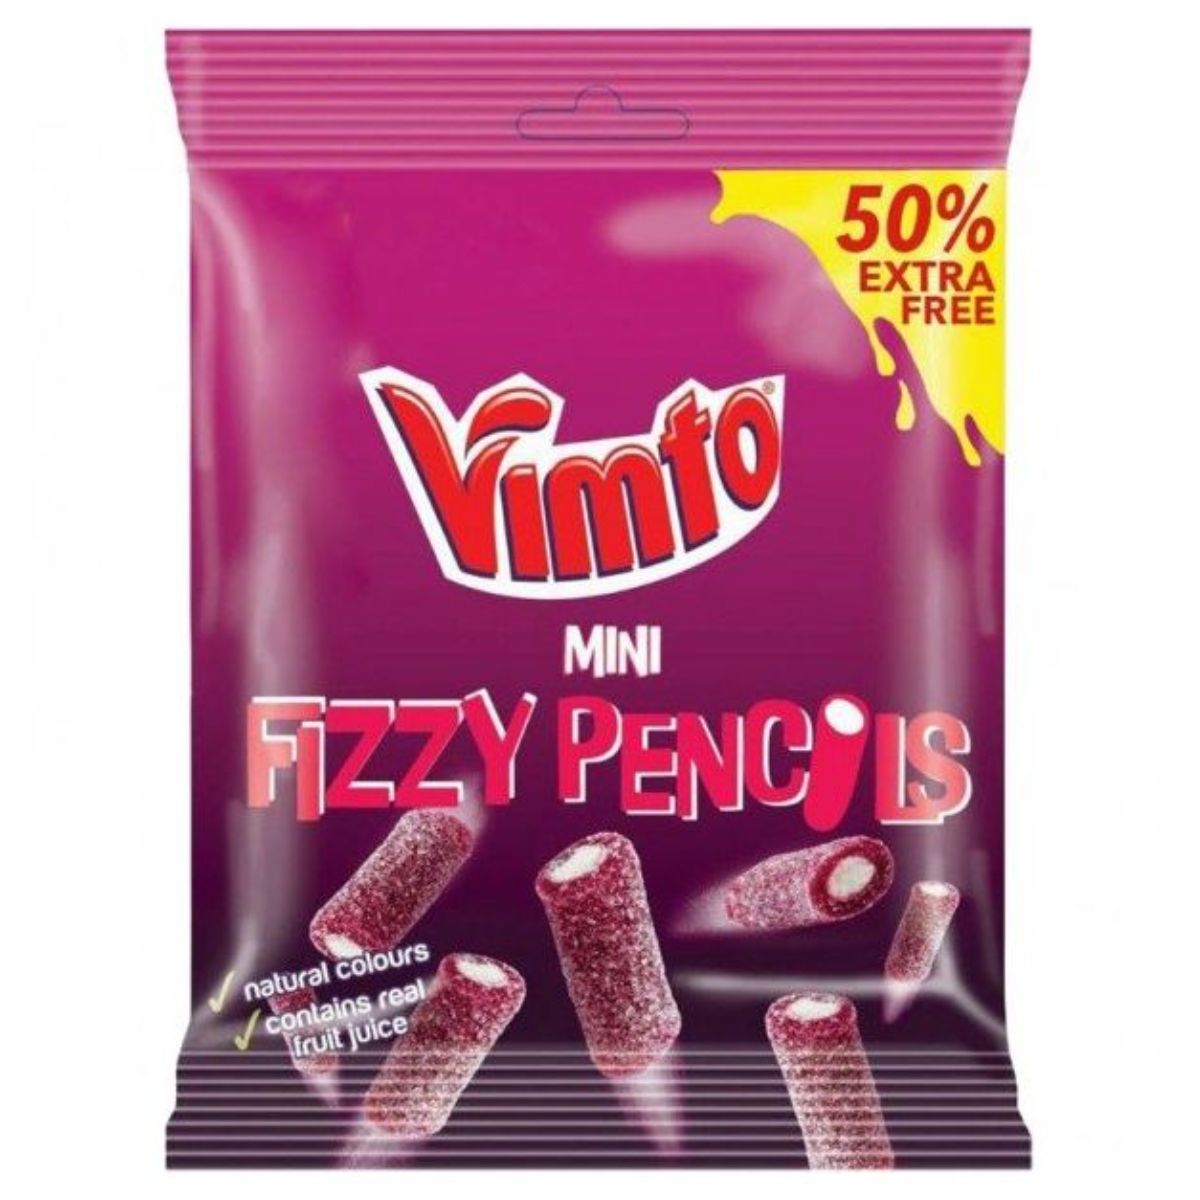 Vimto - Fizzy Pencils - 220g mini fizzy pencils.